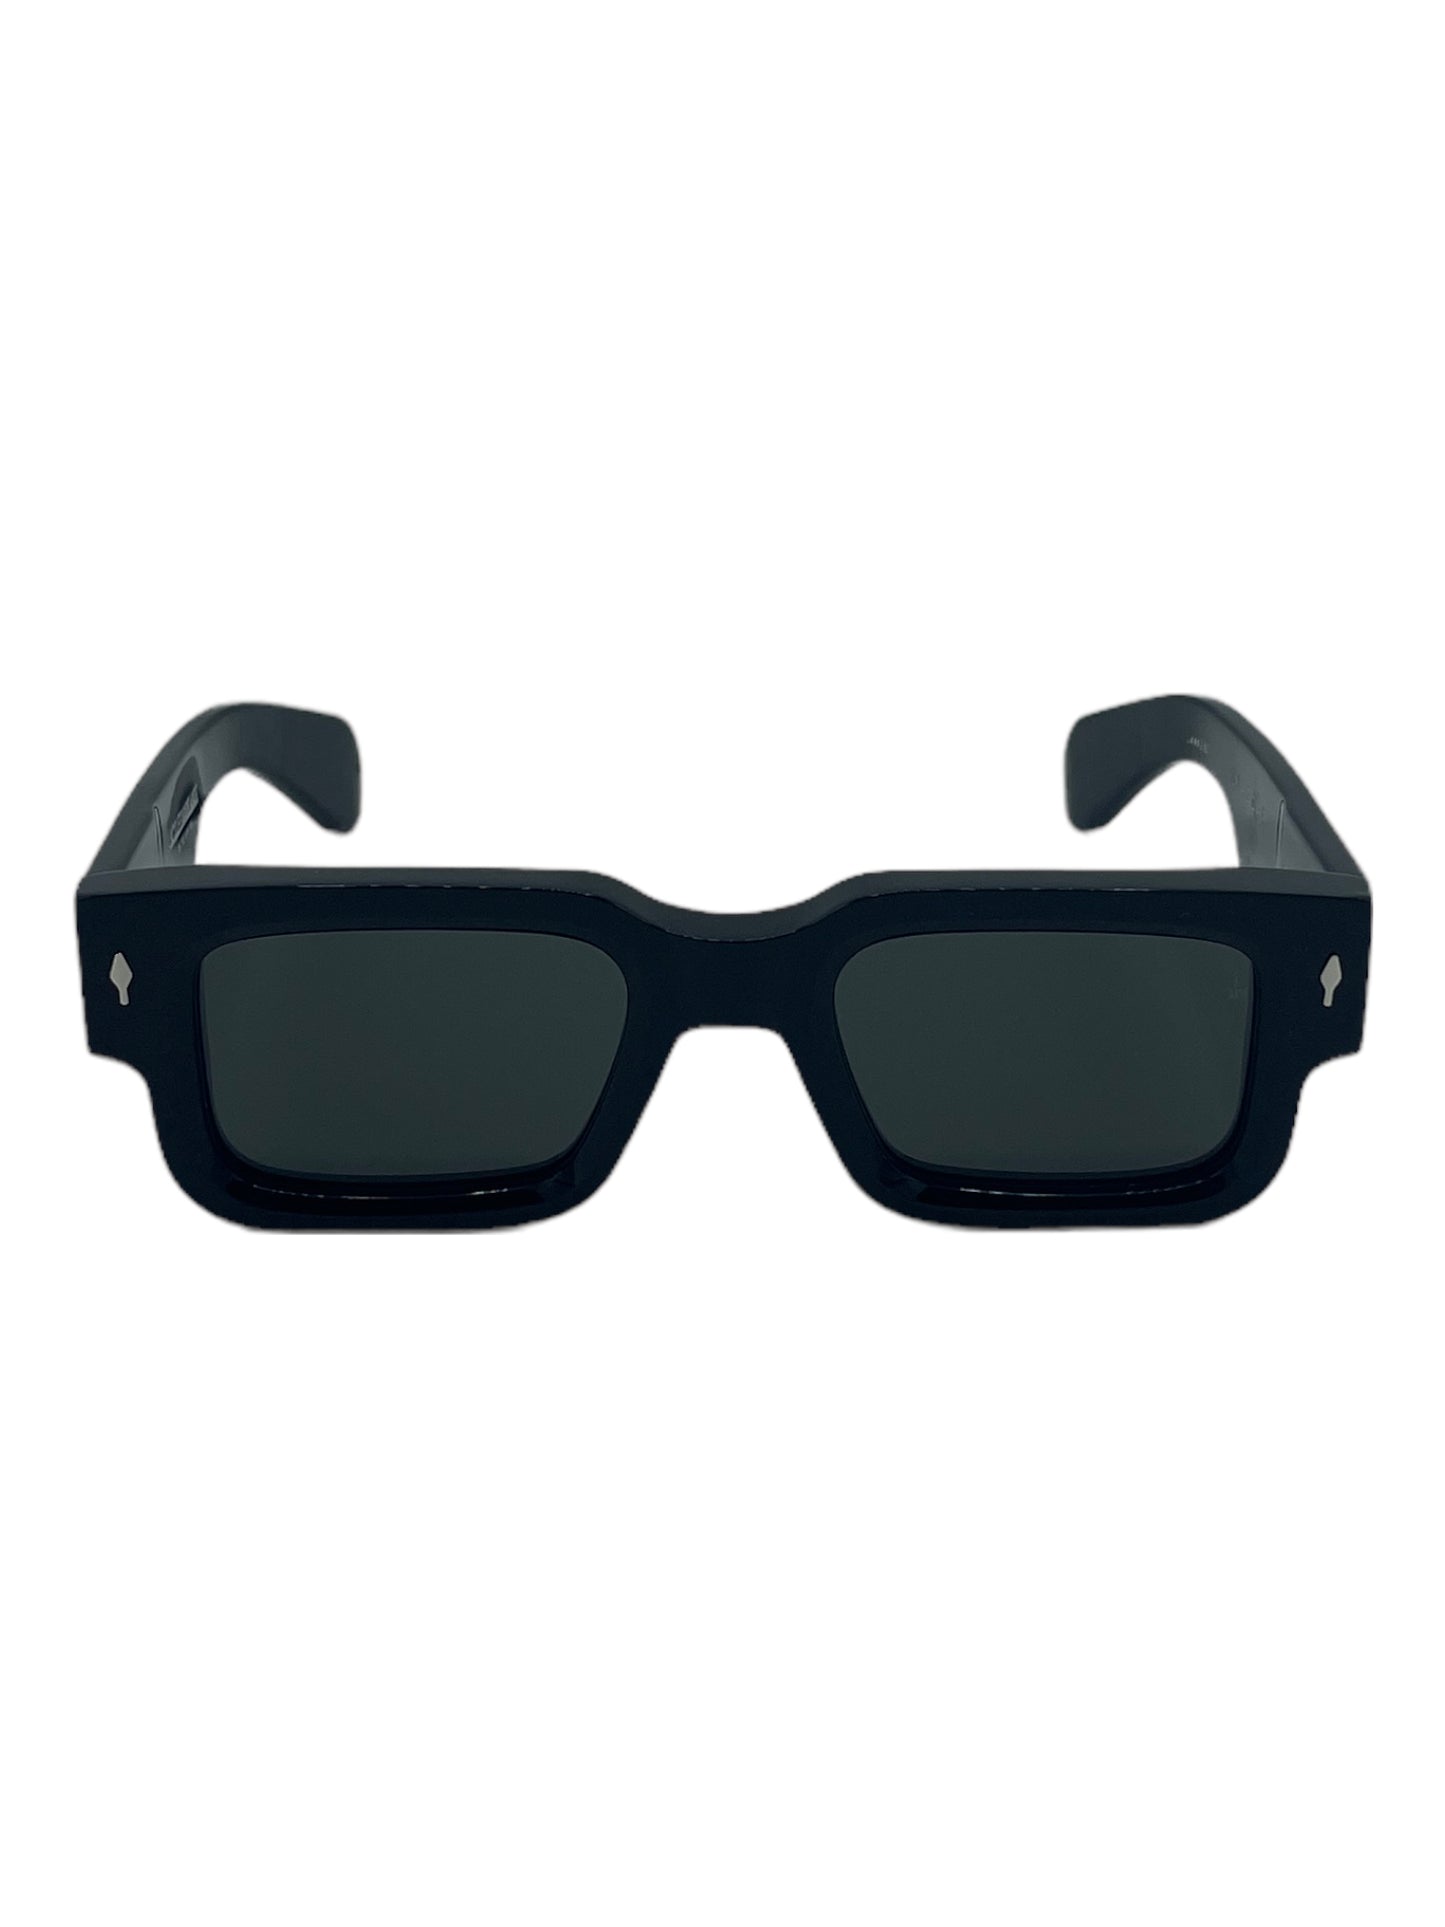 Jacques Marie Mage Black ‘Ascari’ Sunglasses